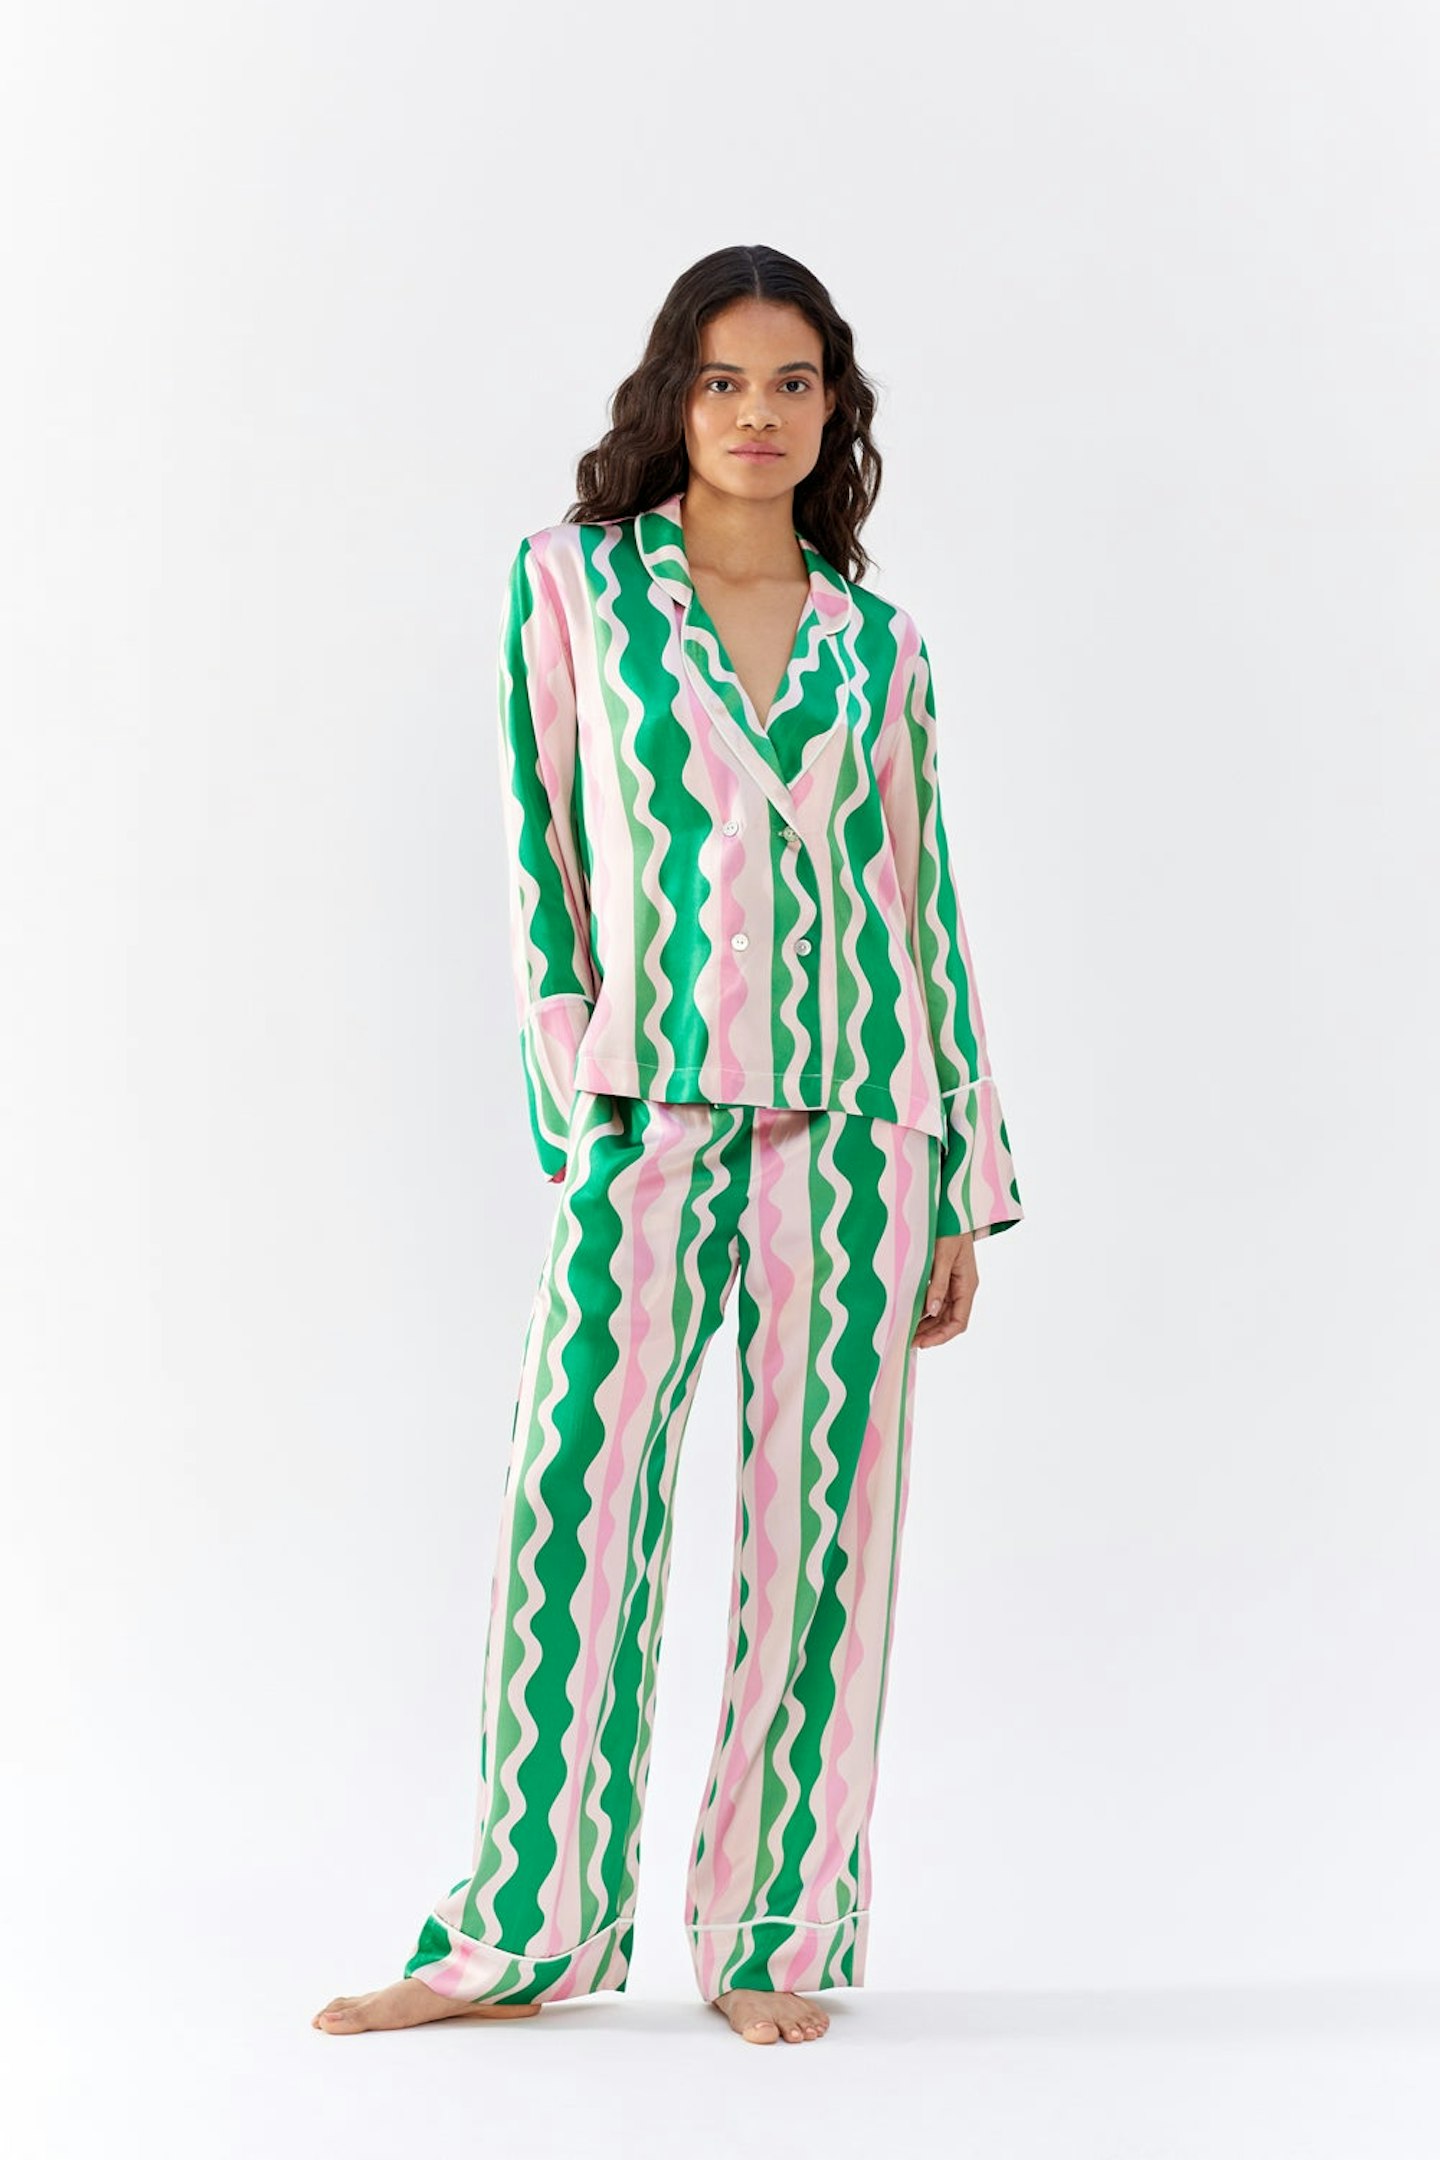 Hesper Fox London, Dietrich Pink Wave Silk Pyjama Set, £360